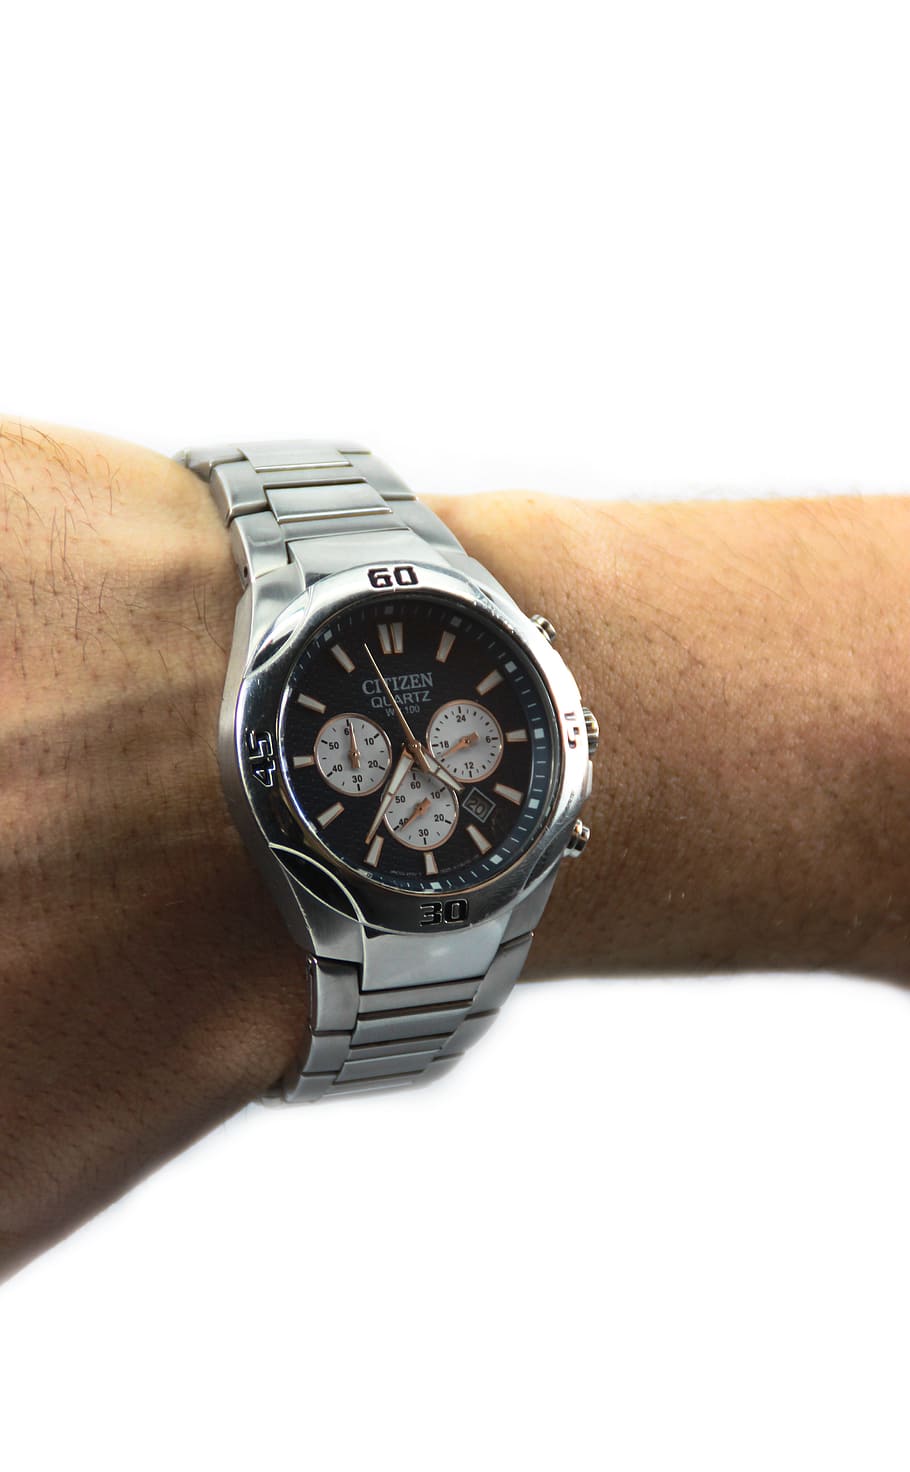 Clock, Watch, Hand, Time, White, blue, black, white background, wristwatch, wrist